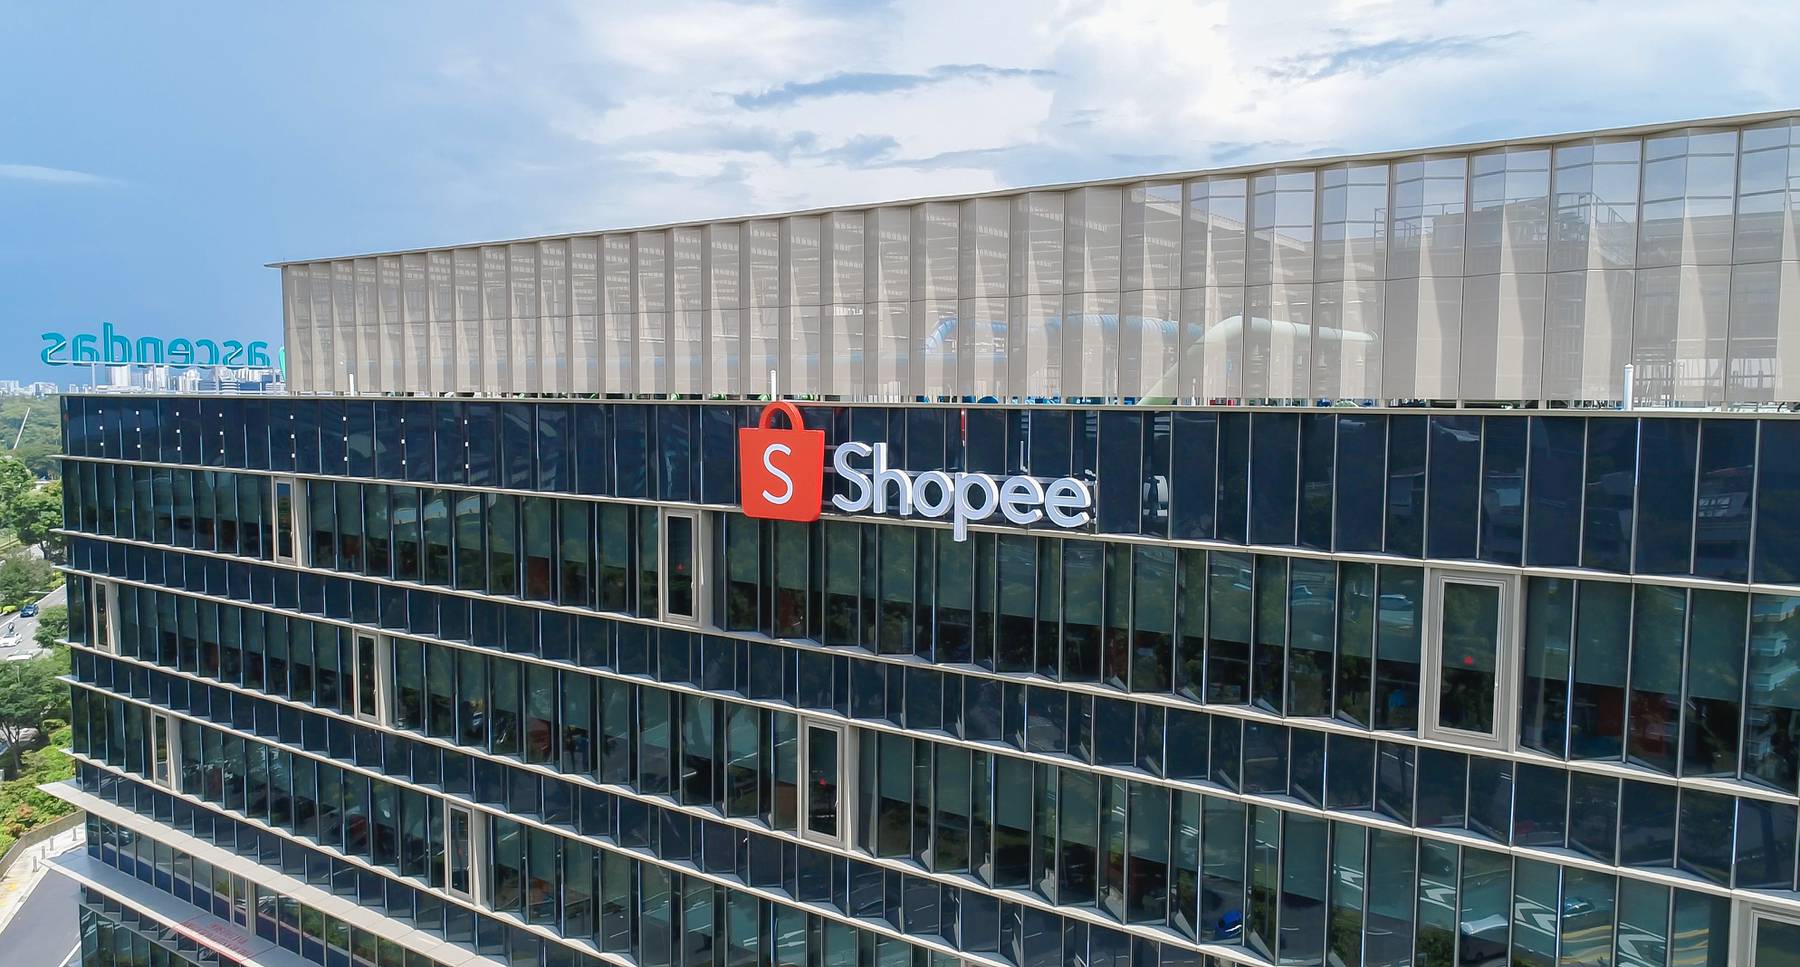 Shopee's headquarters in Singapore. Shopee.